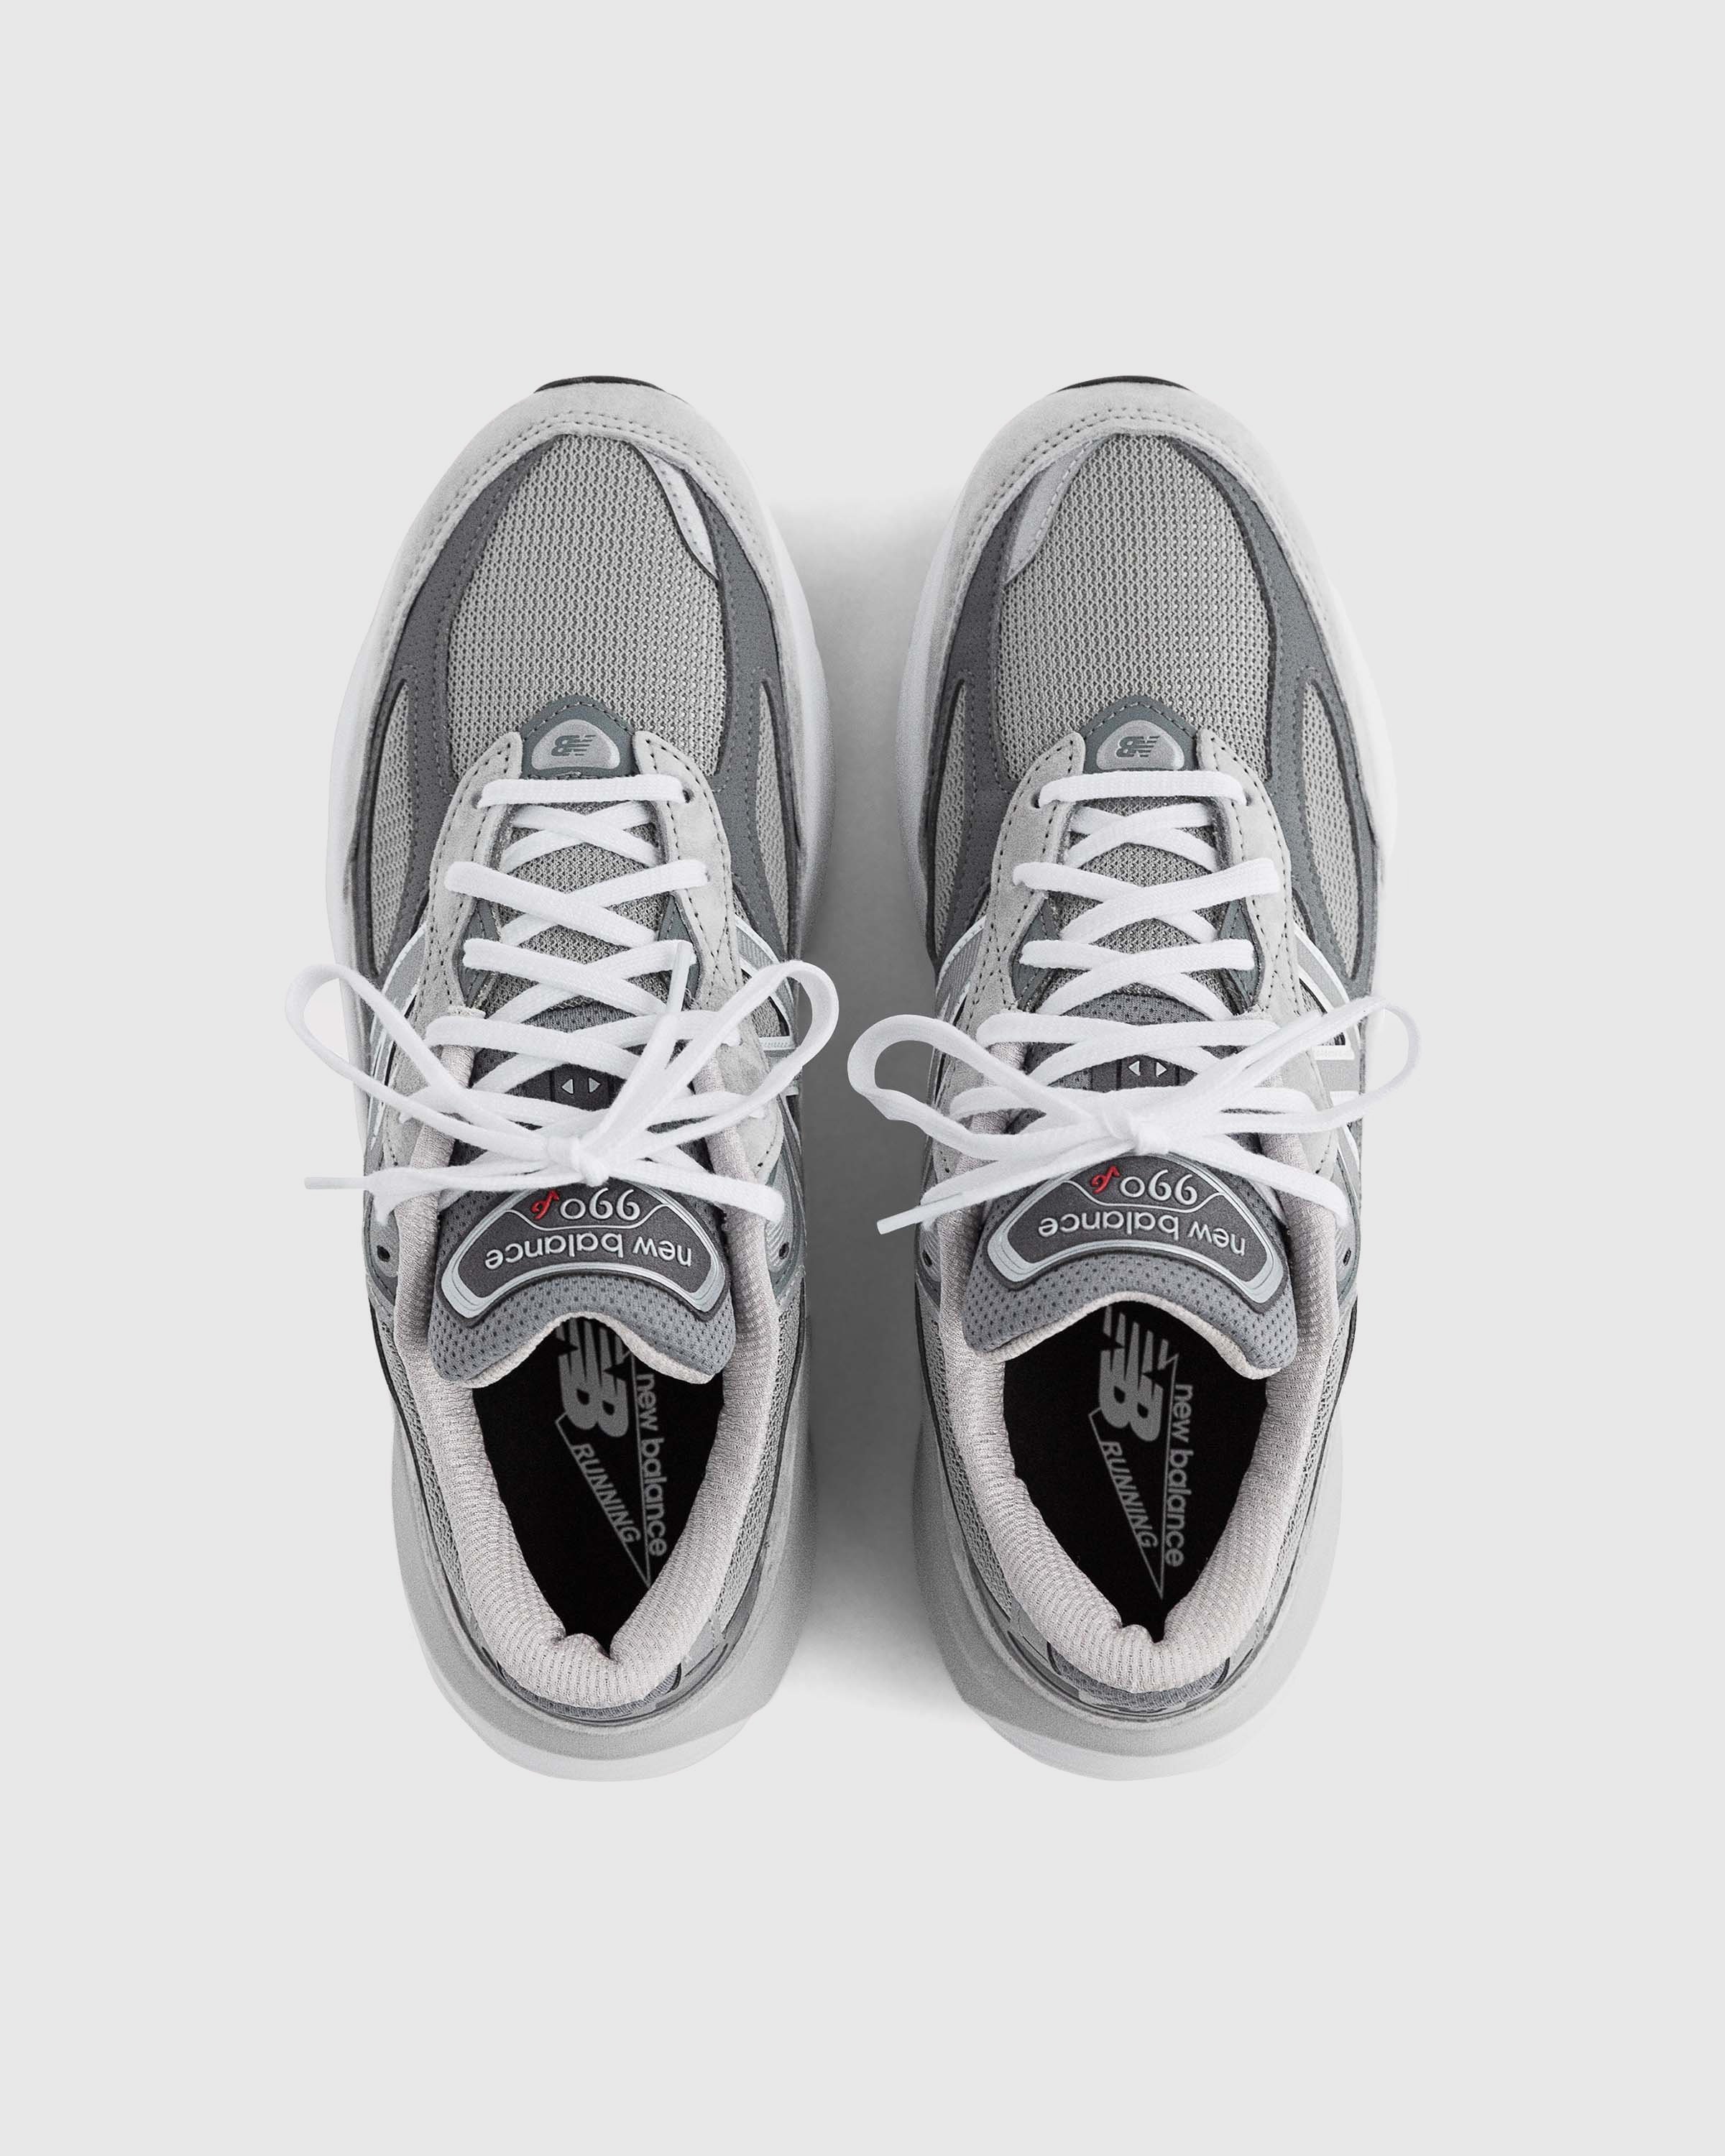 New Balance - M 990v6 Cool Gray - Footwear - Grey - Image 5